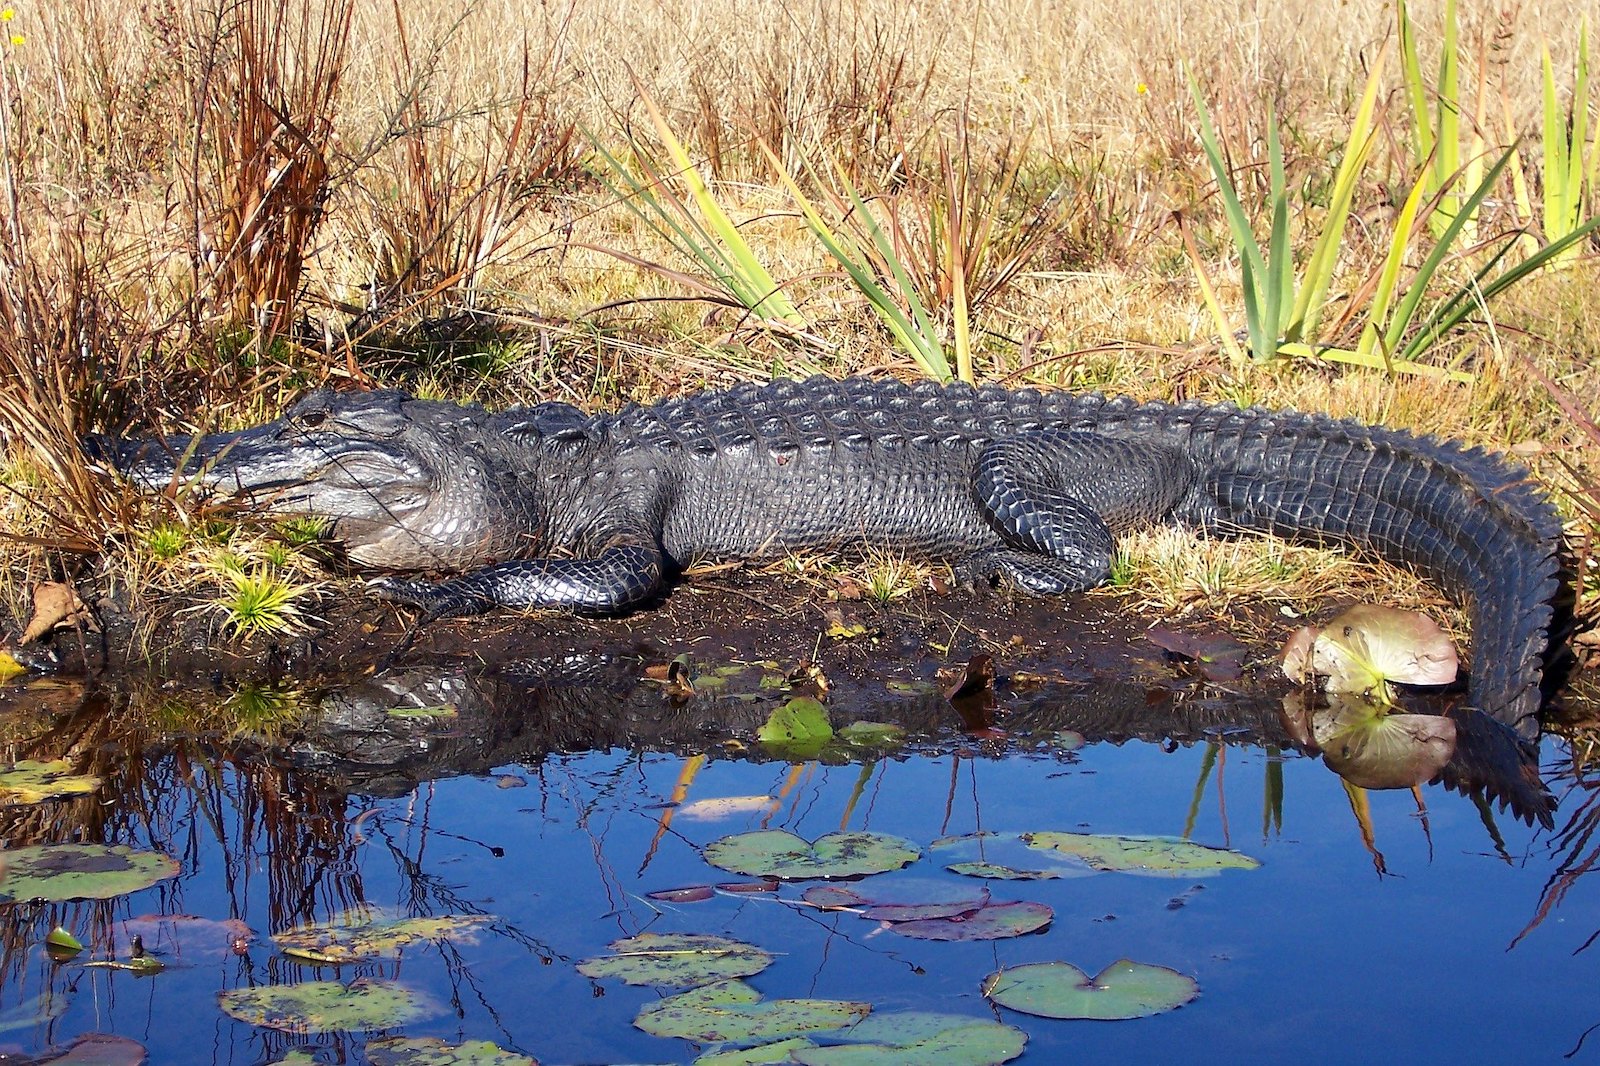 un grand alligator regarde vers la gauche devant un bassin d'eau avec des nénuphars